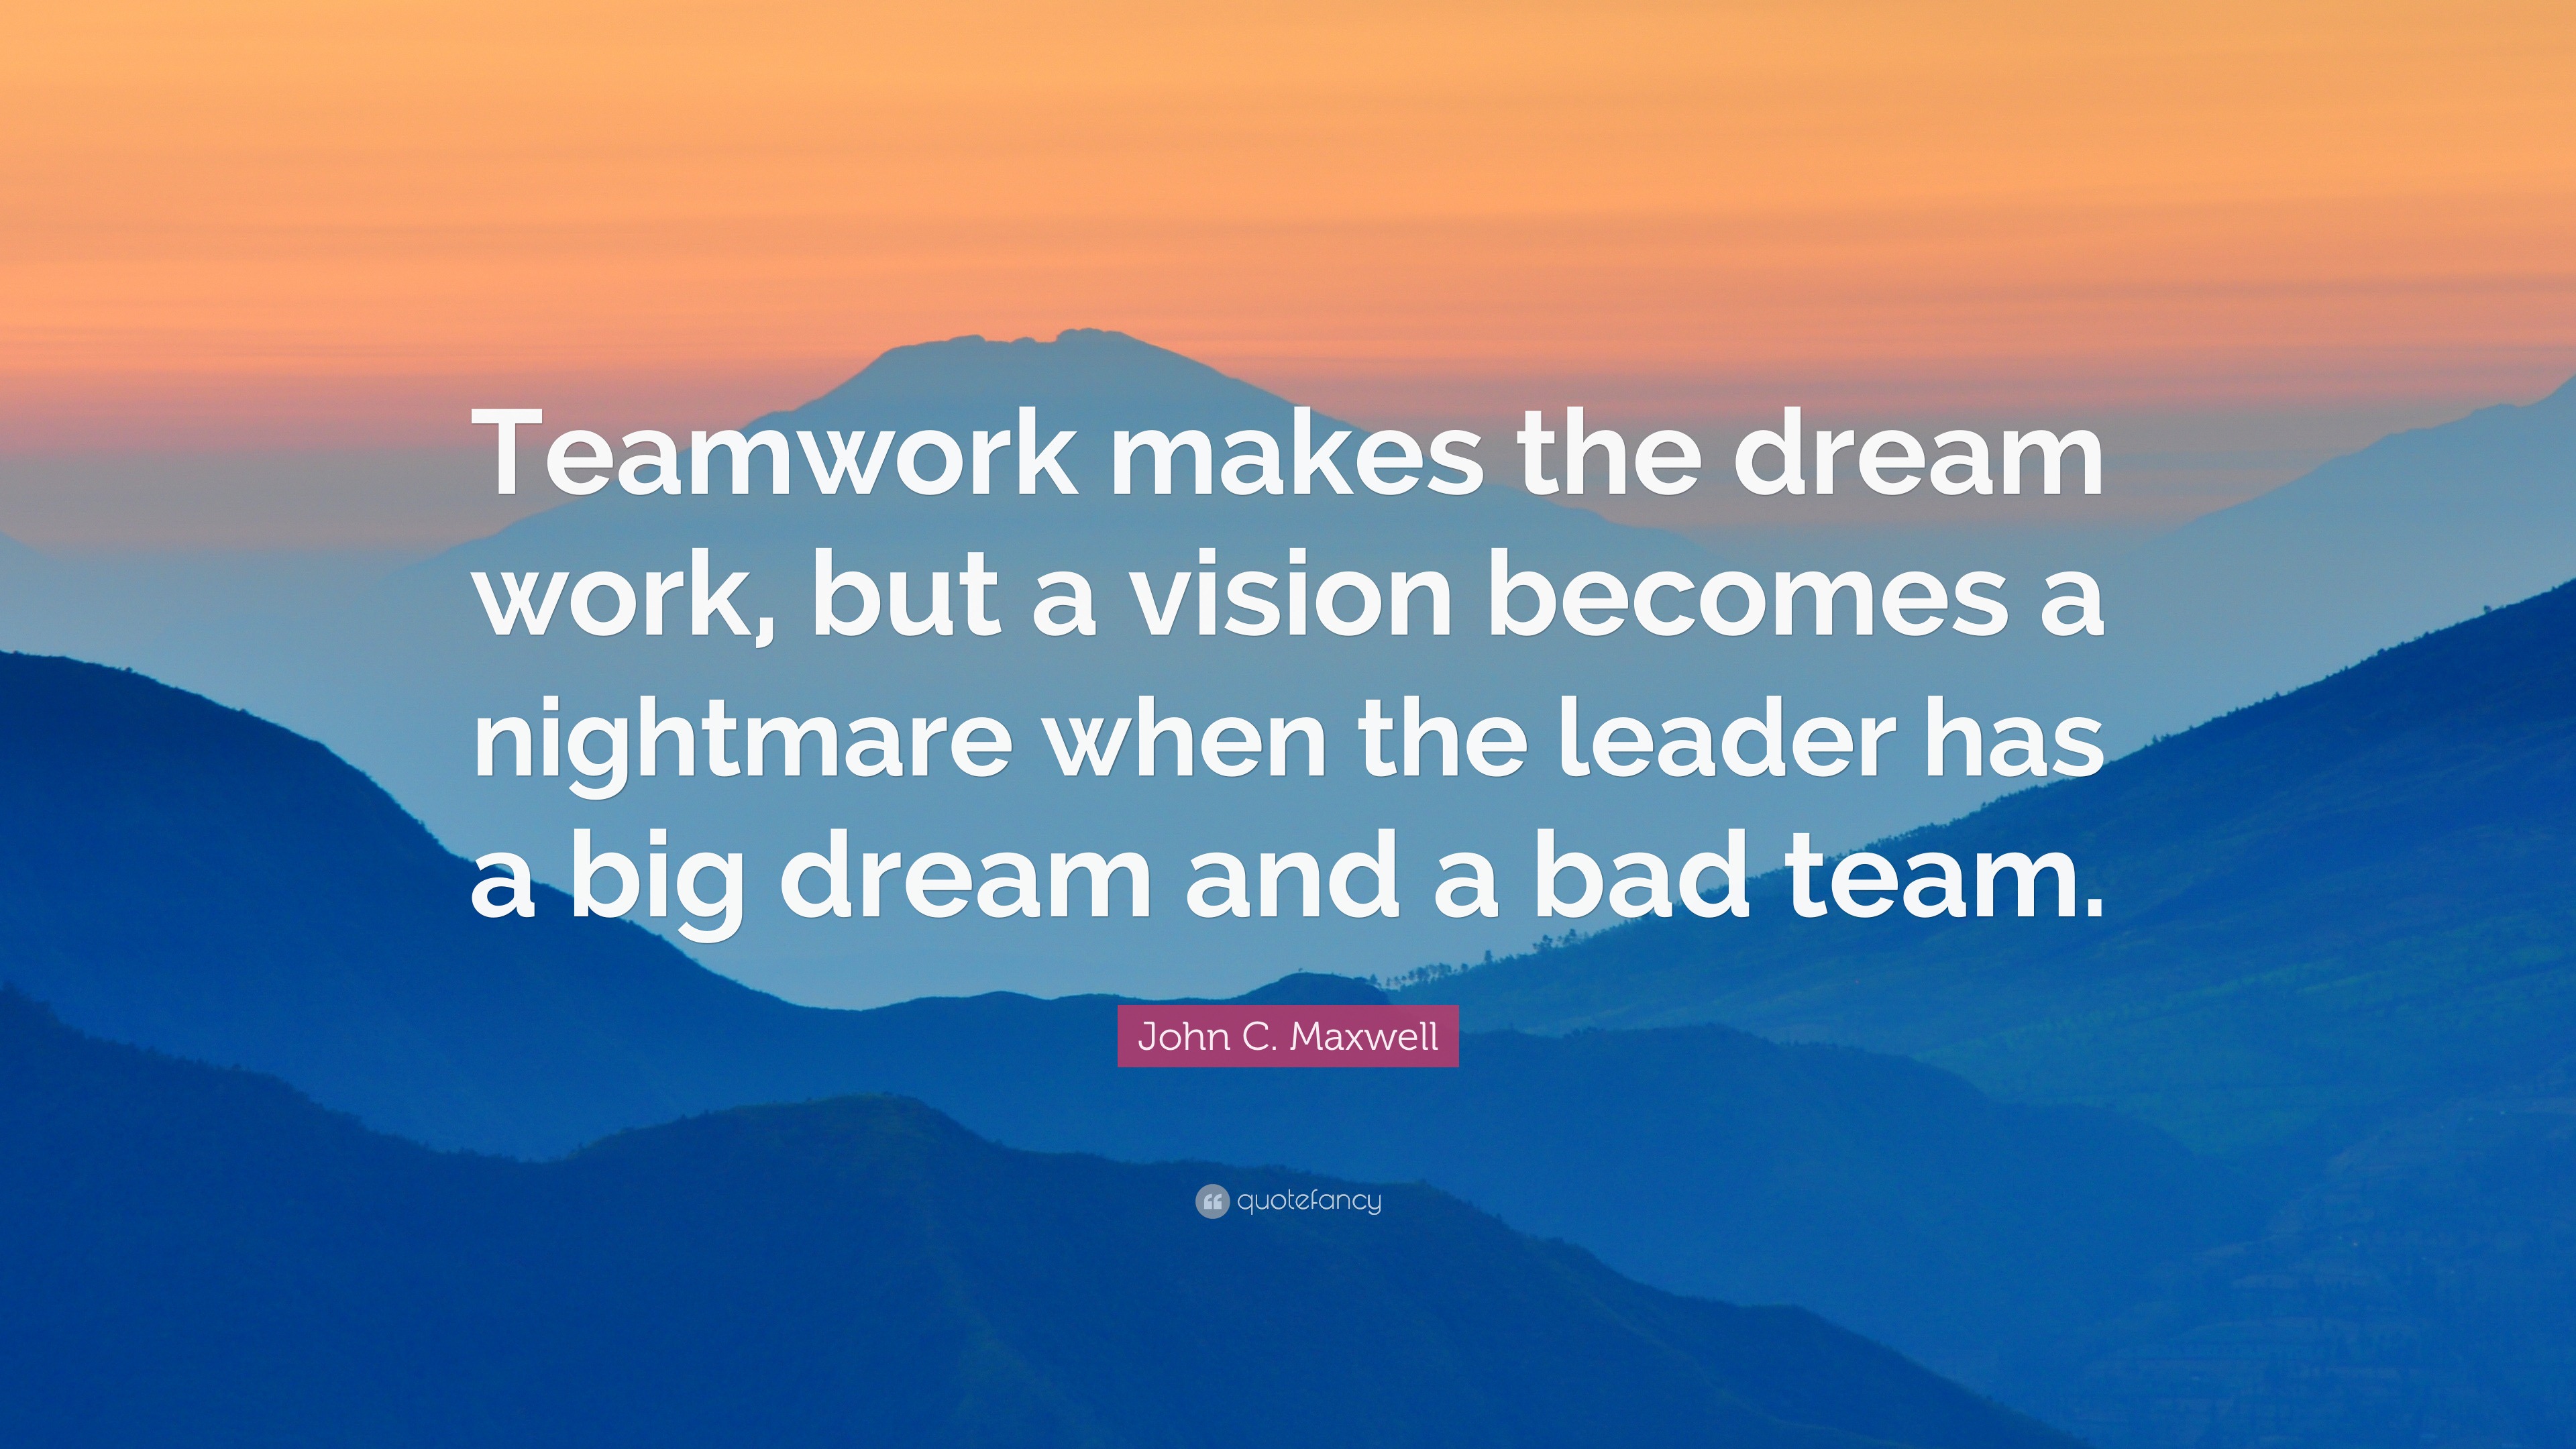 John C. Maxwell Quote: “Teamwork makes the dream work, but a vision ...